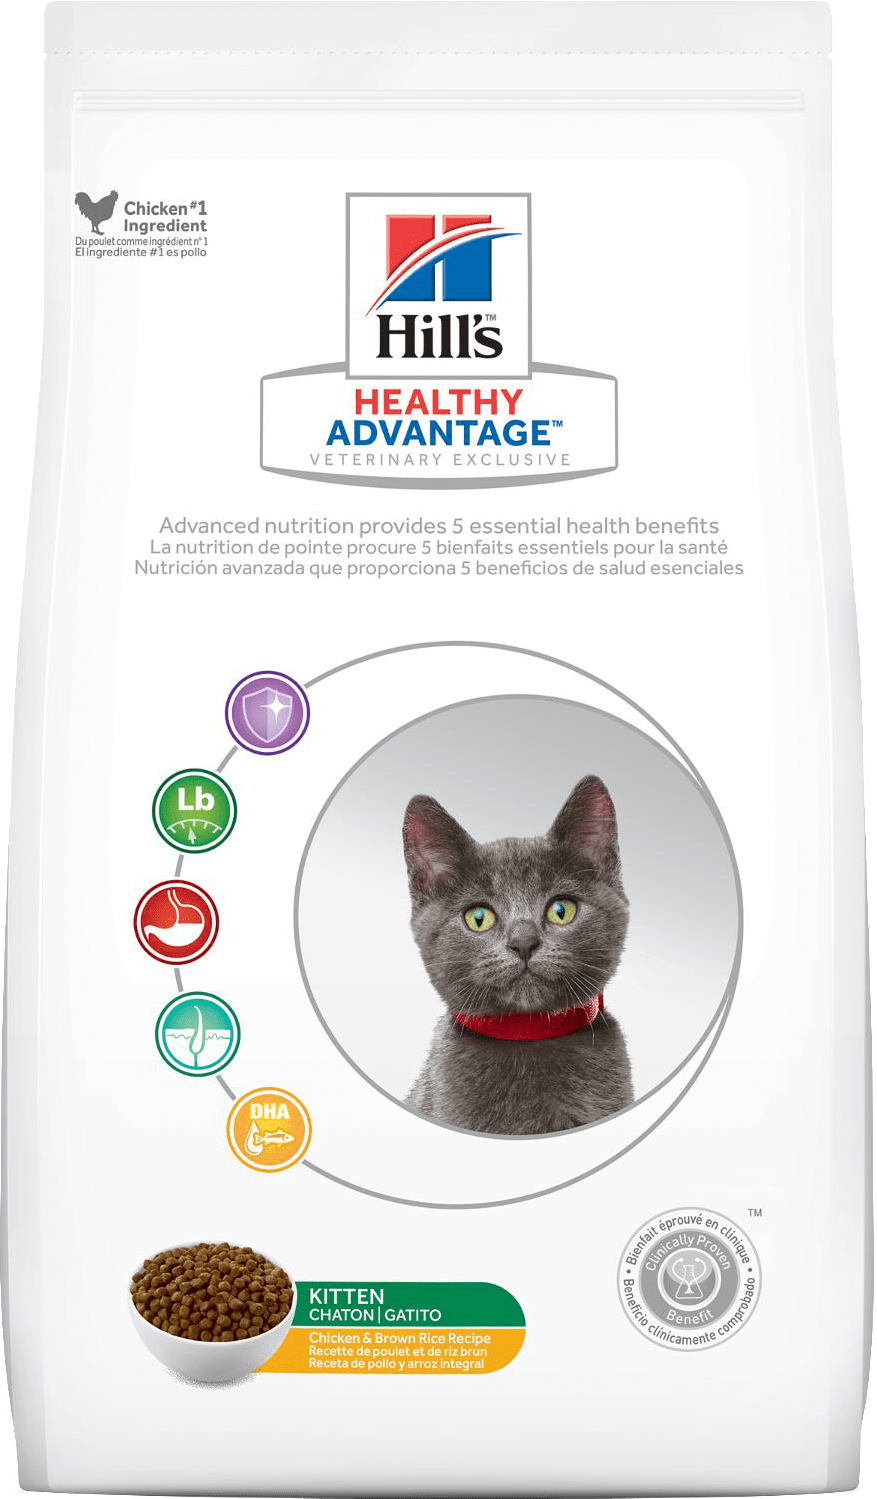 Hill's Healthy Advantage Kitten Cat Food Review